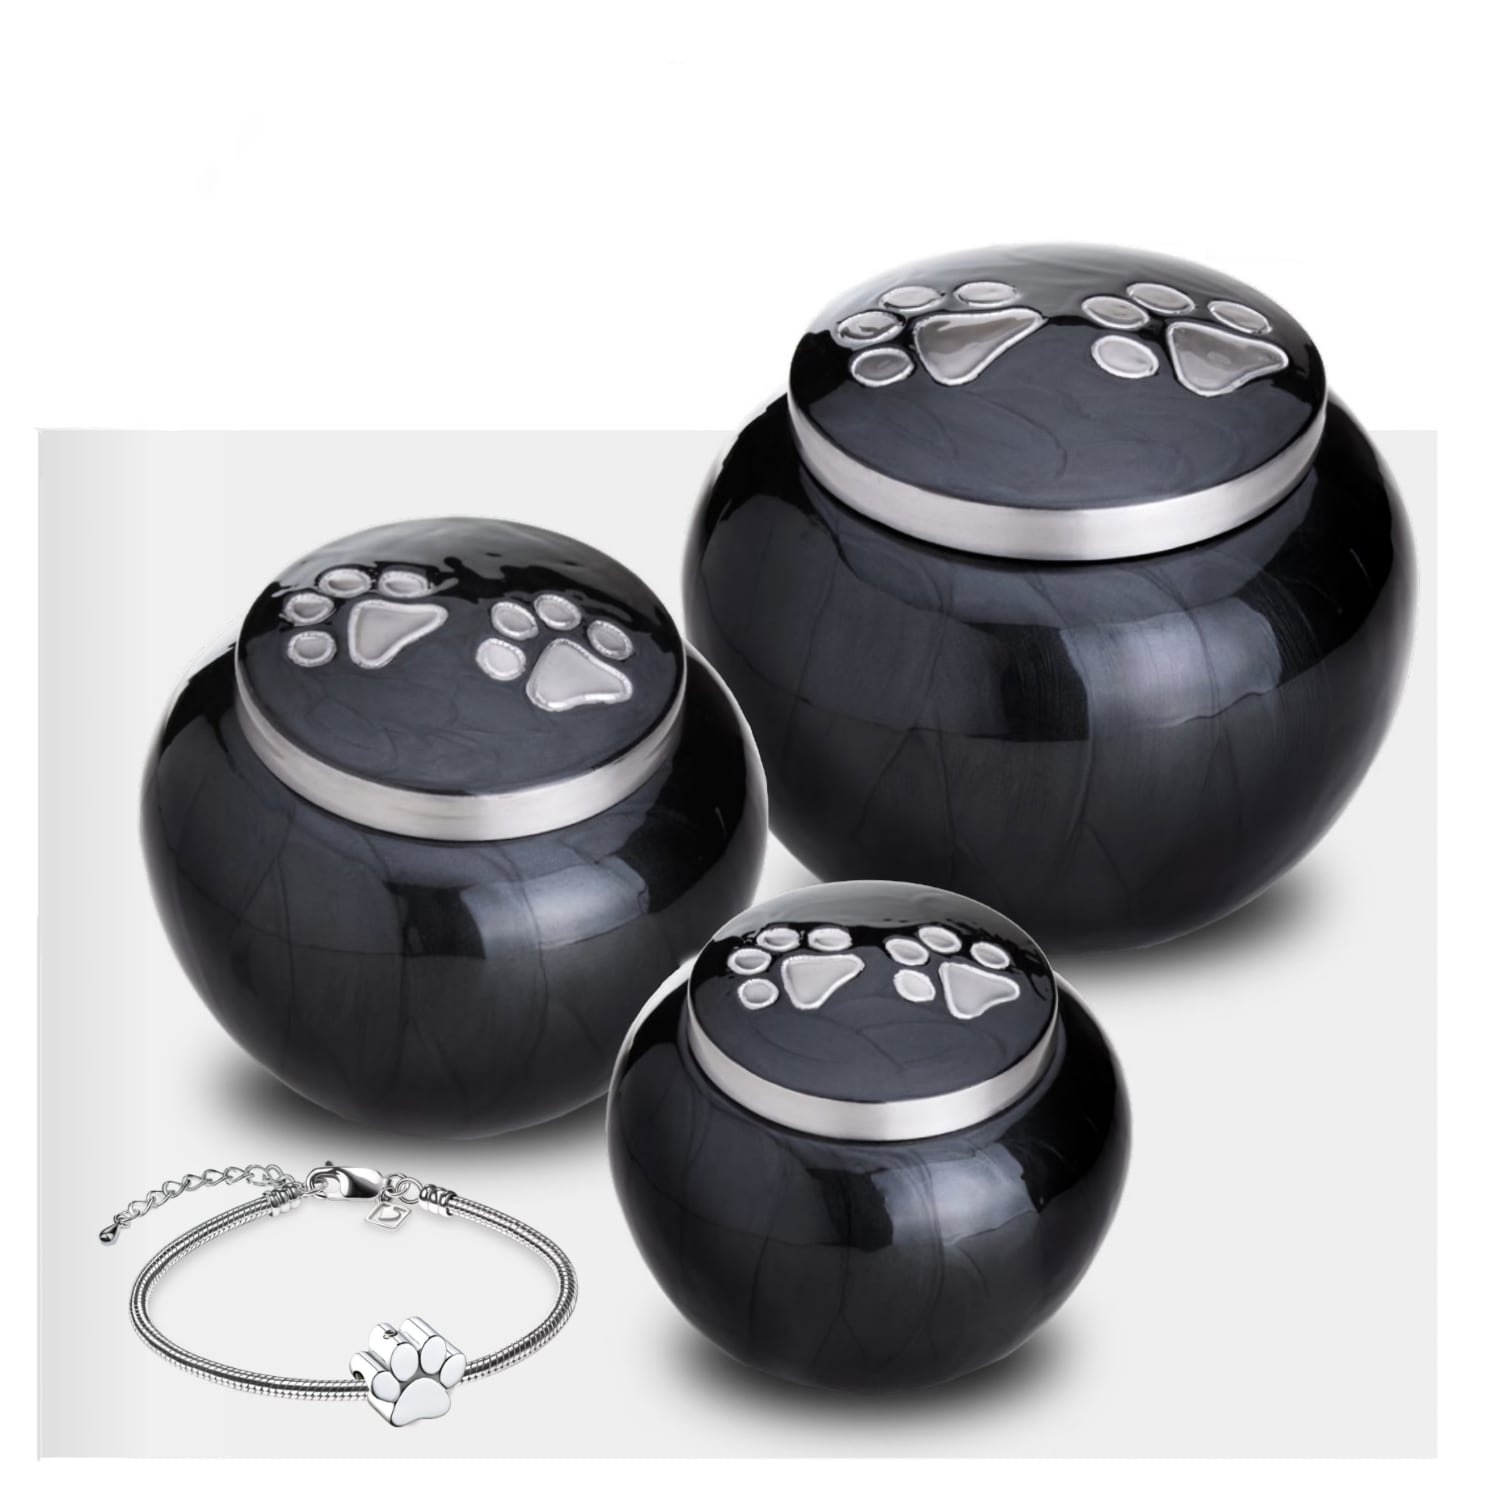 Urnhond-zwart-mat-zilver-met-pootafdruk-set